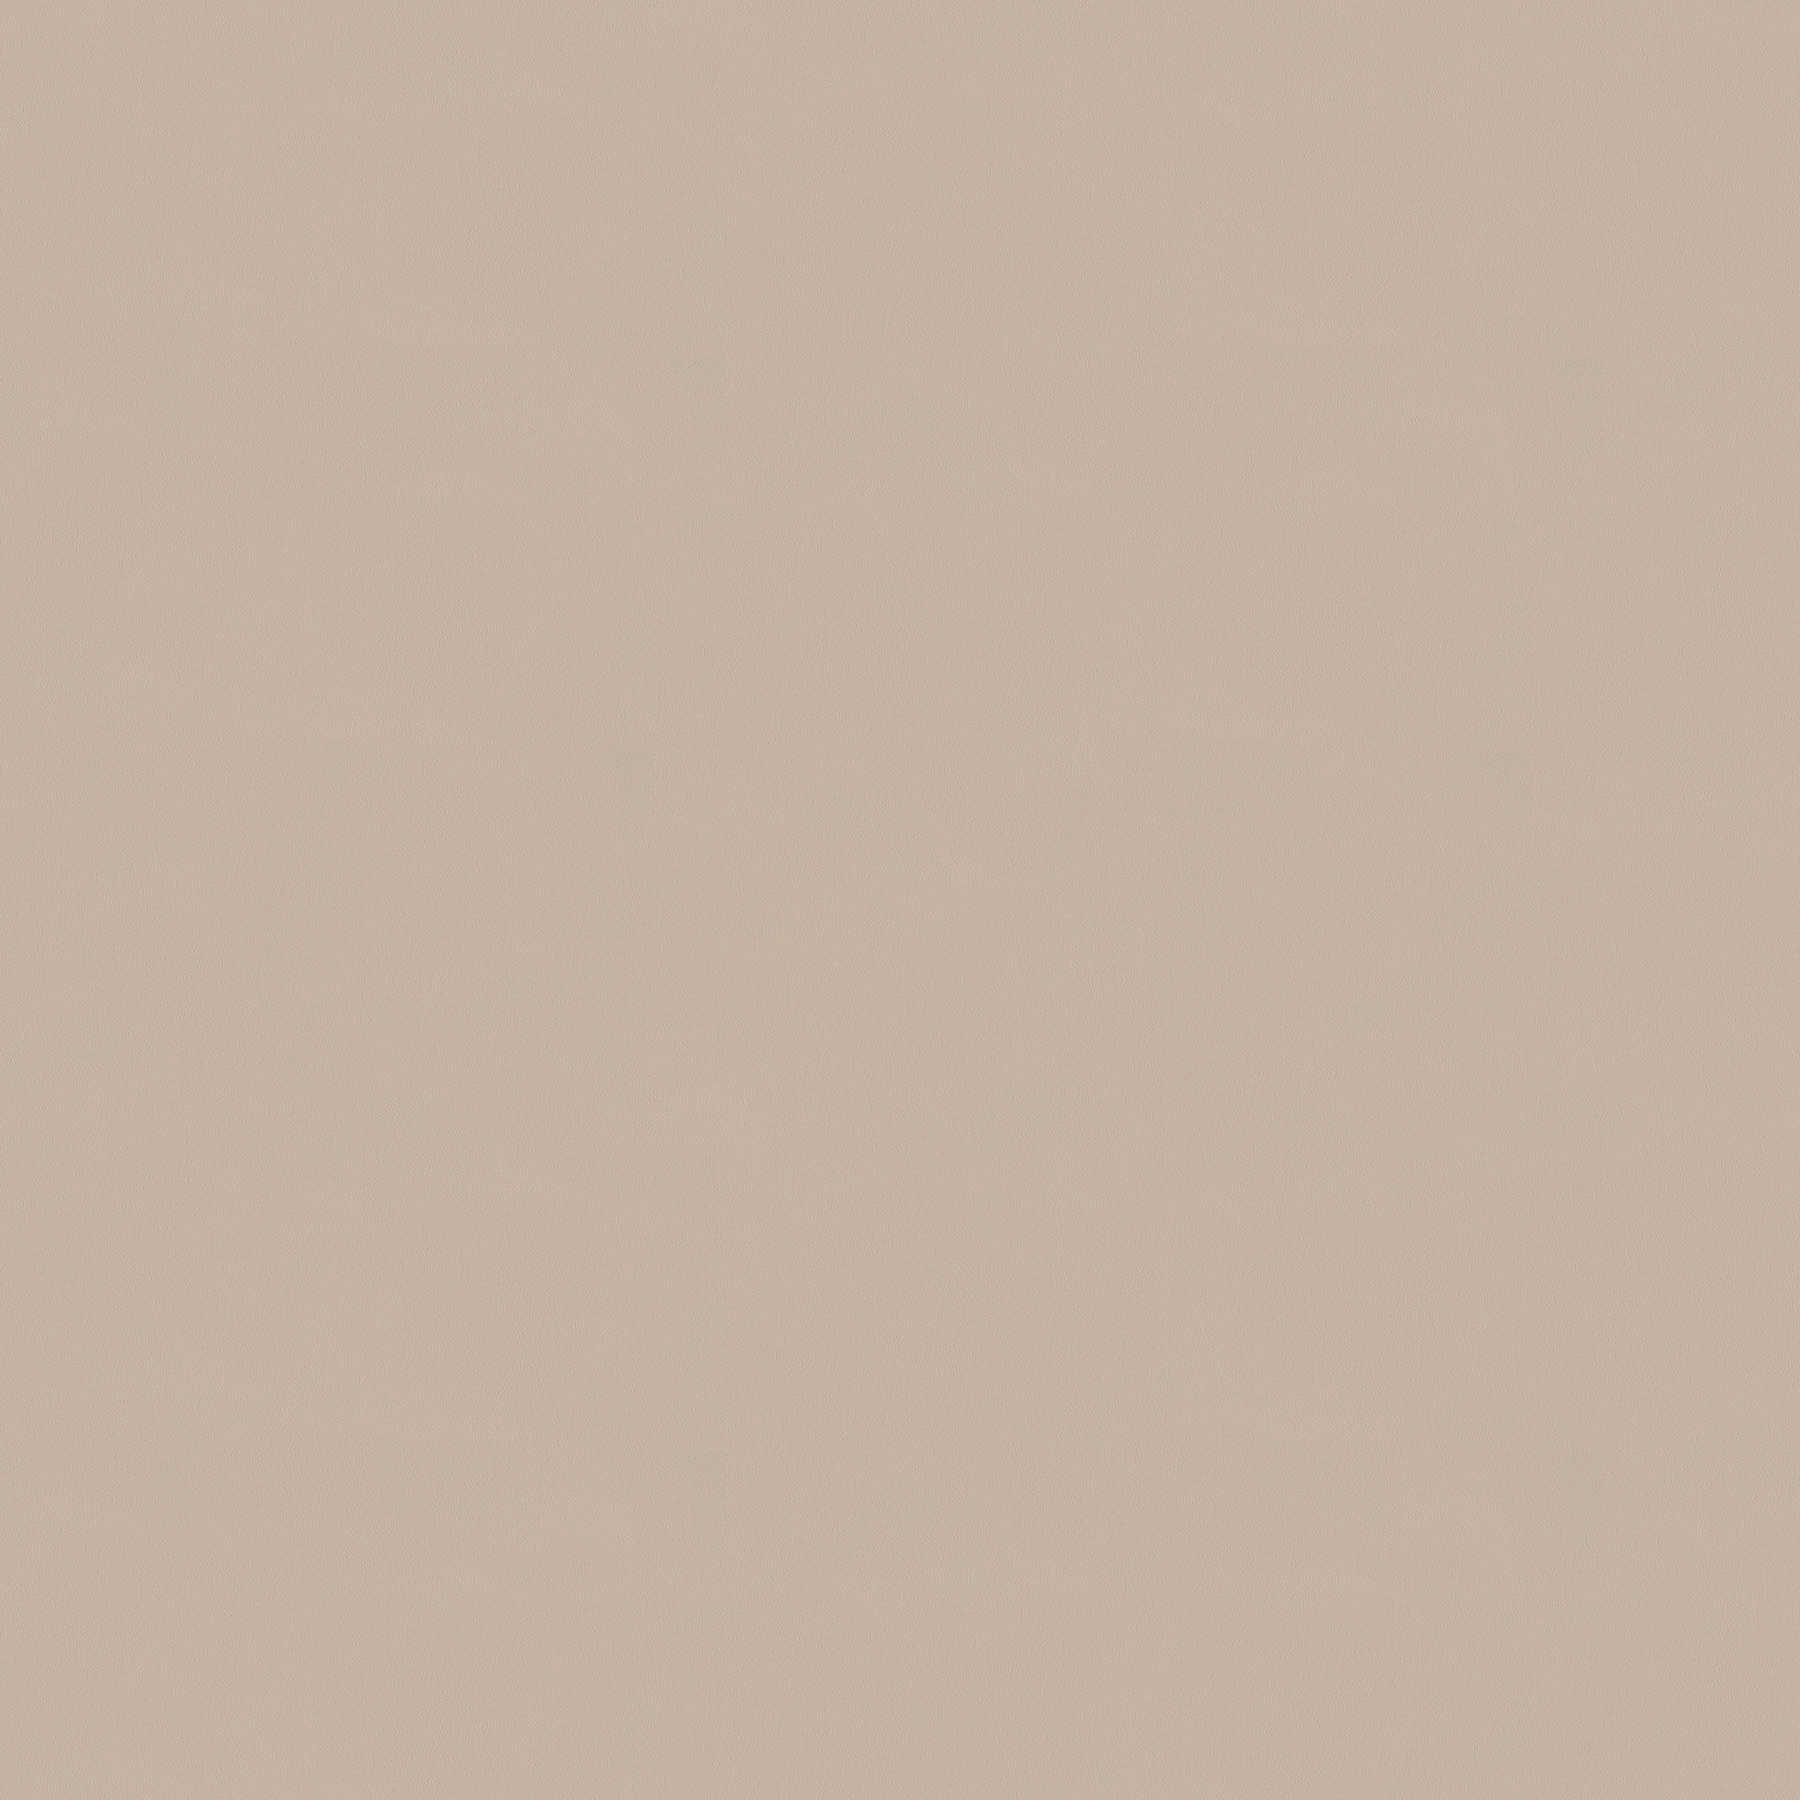 Premium textile-look wallpaper plain & matt - beige
